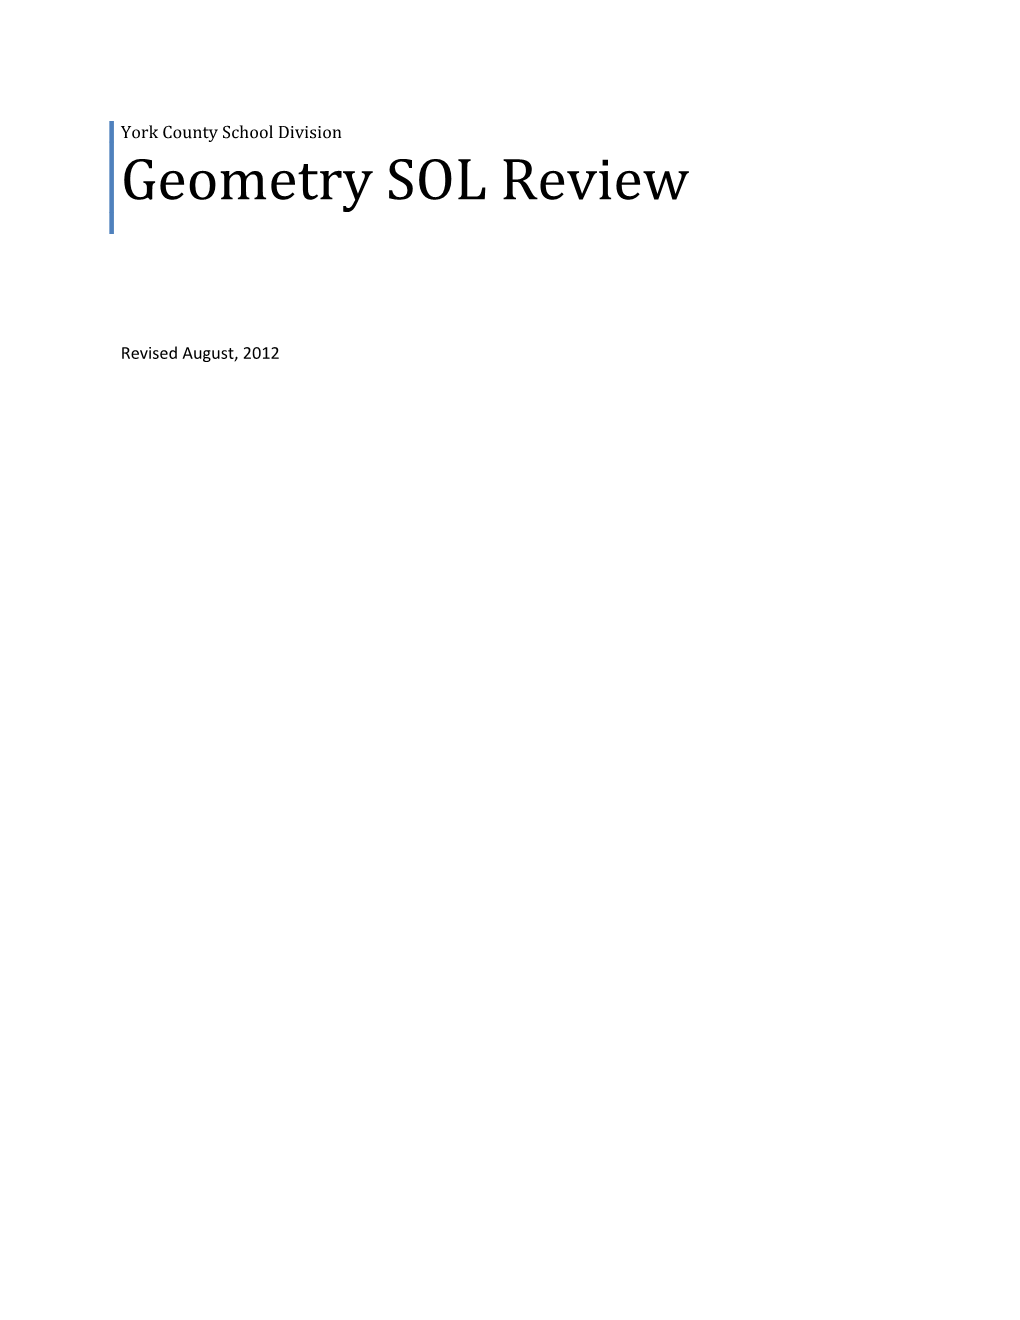 Geometry SOL Review